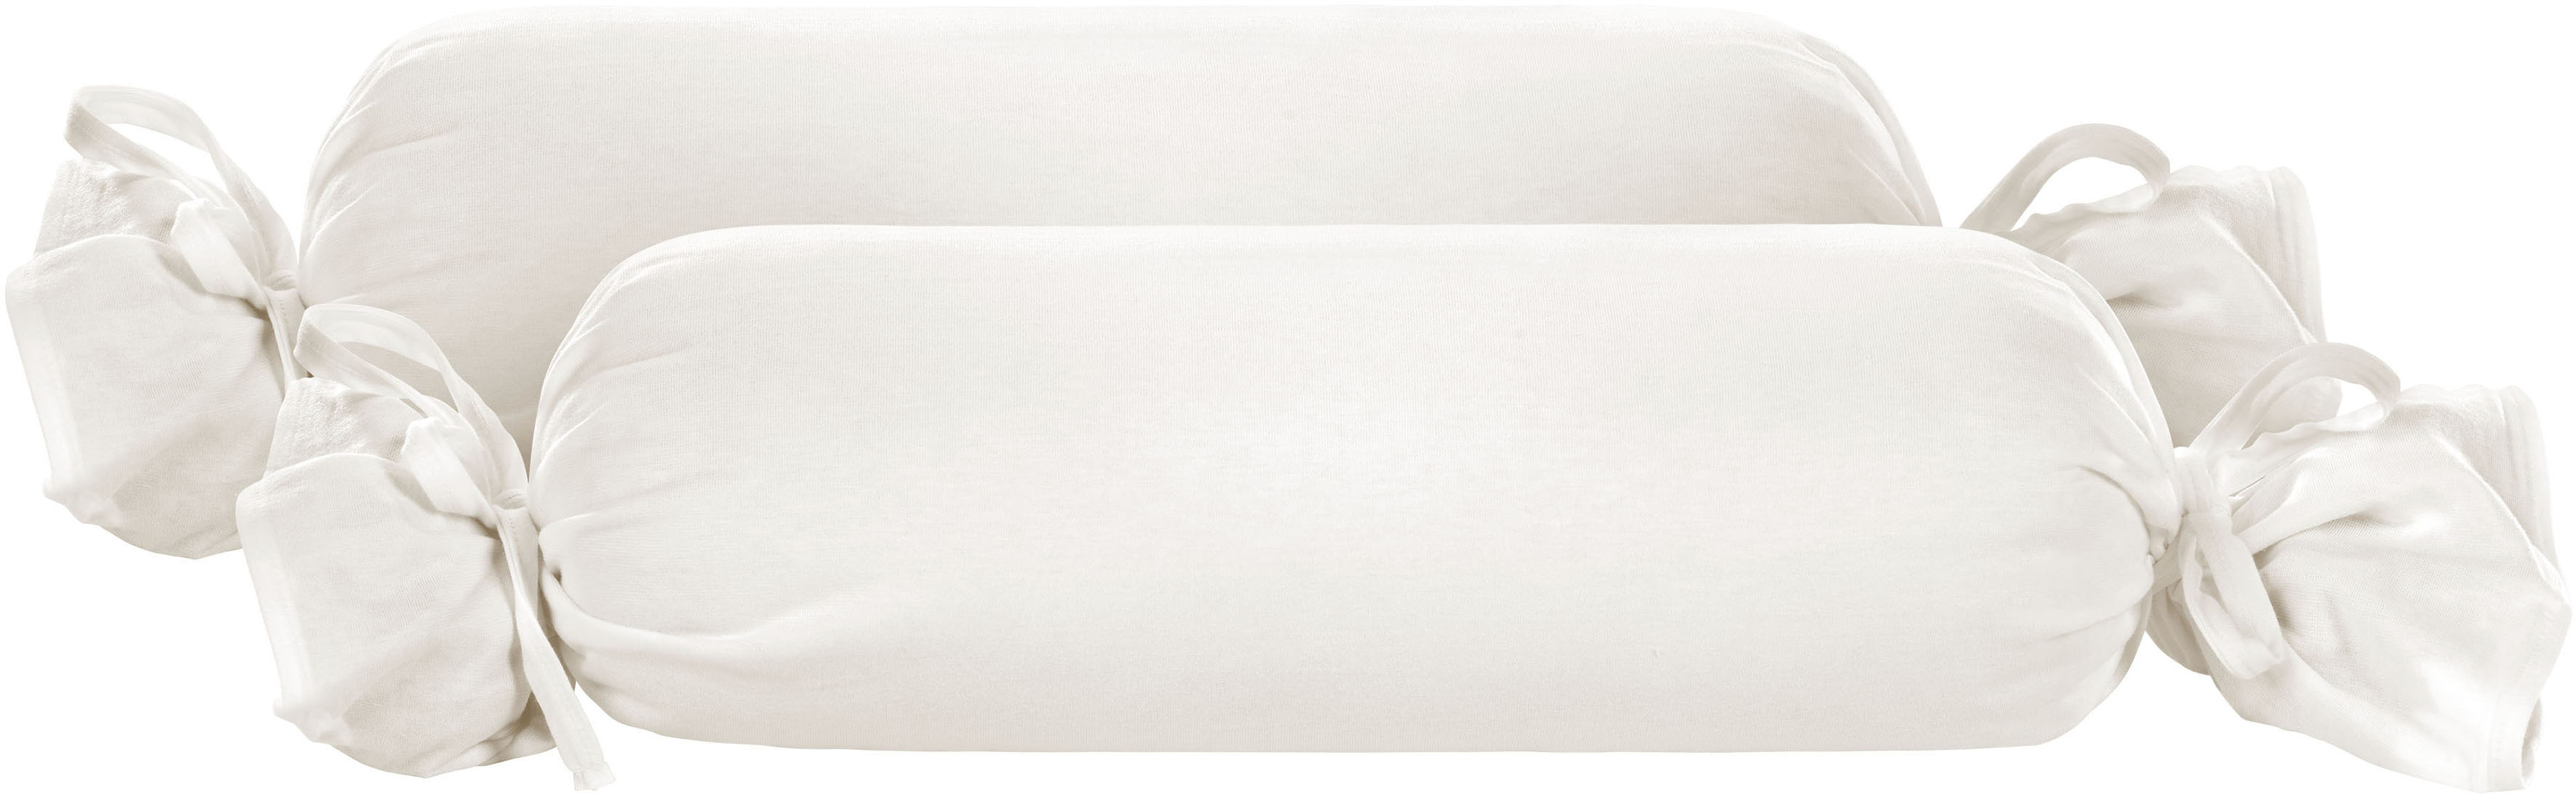 Biberna Nackenrollenbezug »Michi«, (2 Jersey Single-Qualität (1 Stück), Pack St.), mit feinfädige 2 dichte